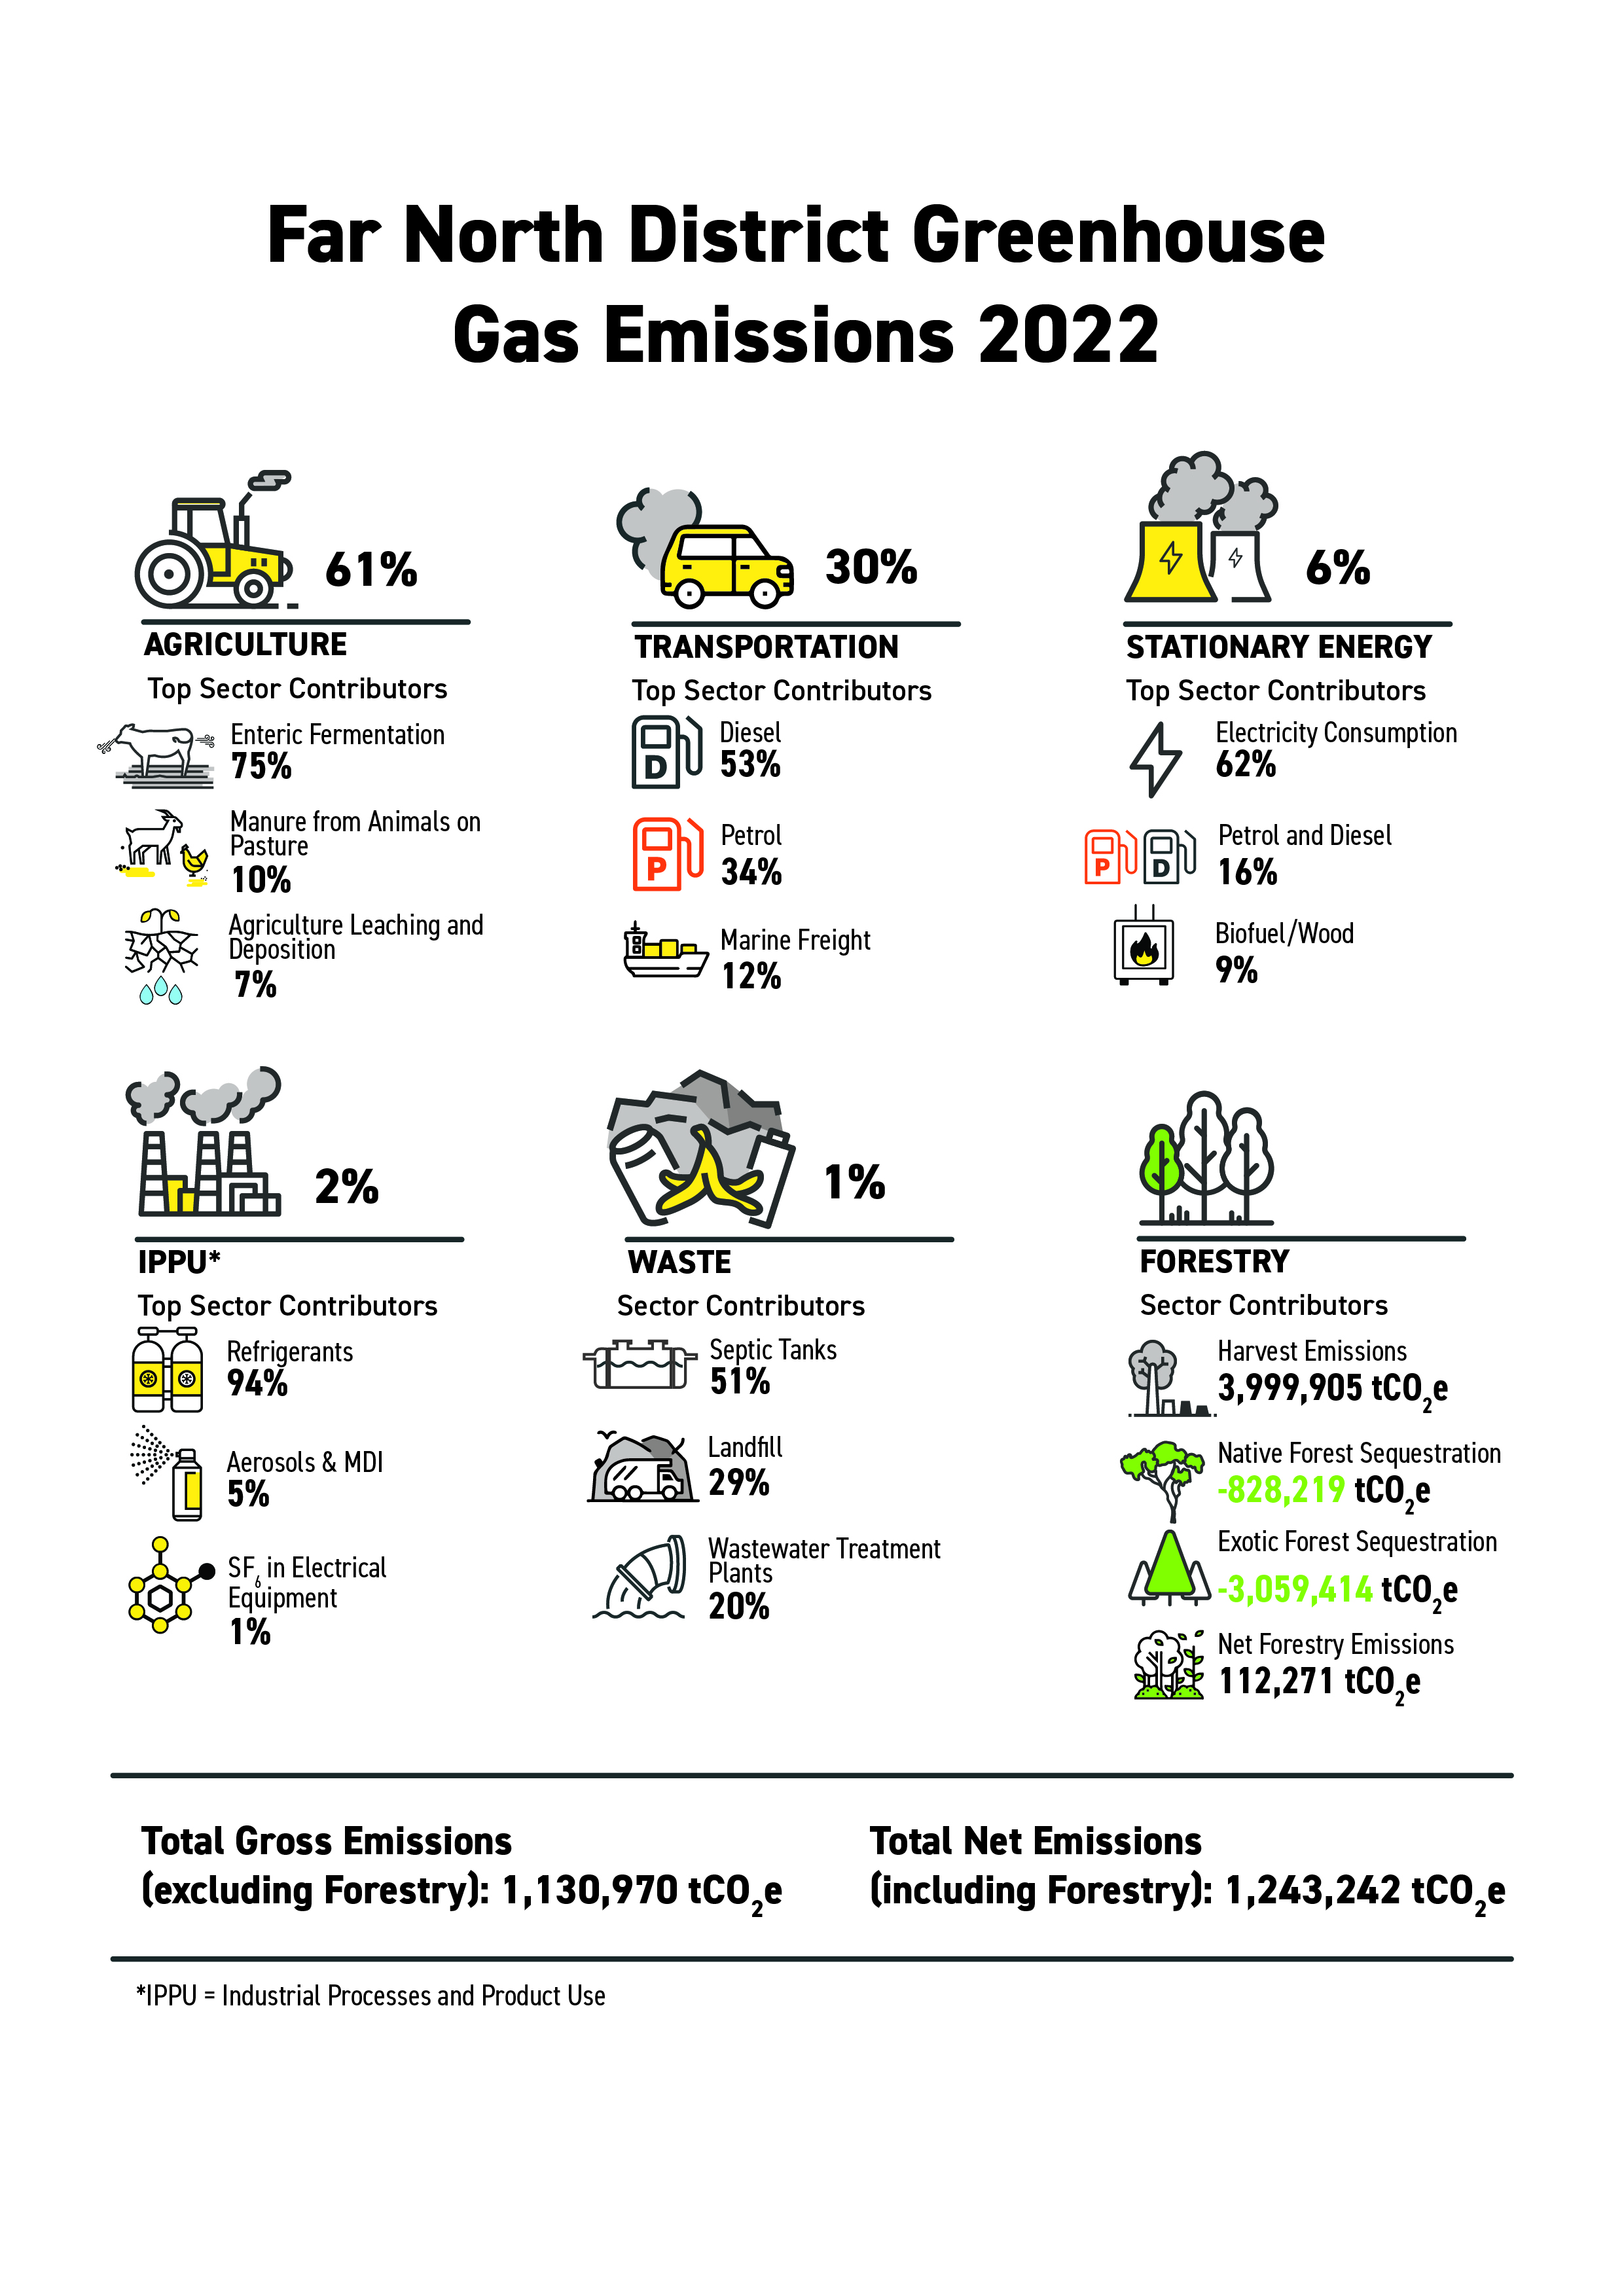 FND greenhouse gas emissions 2022